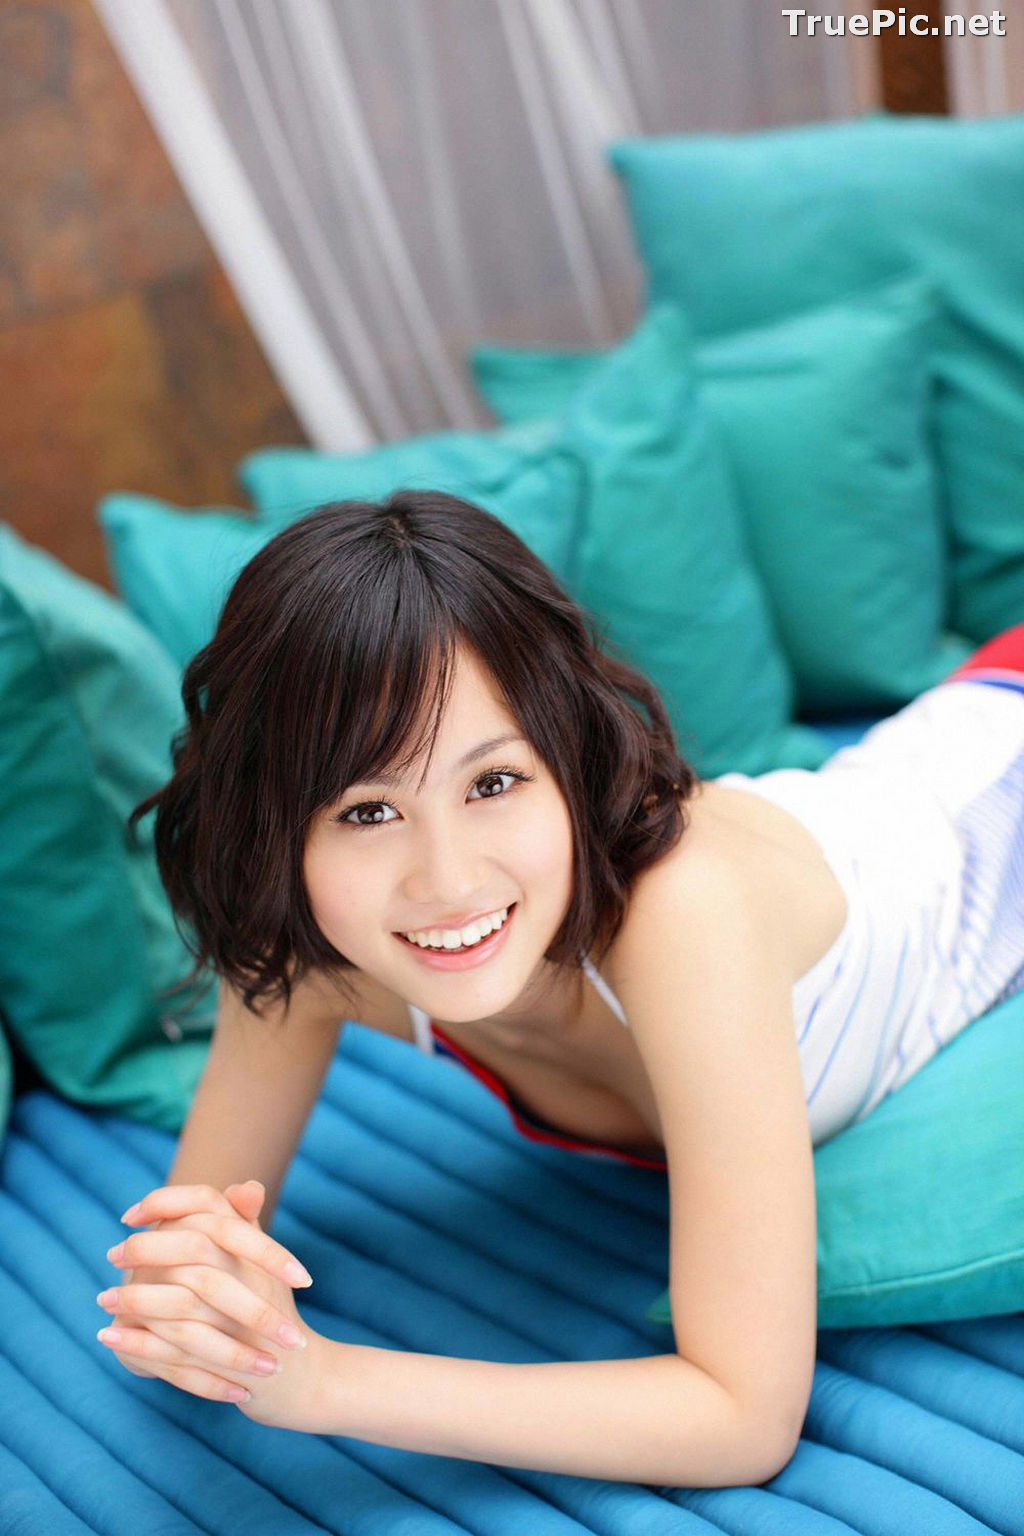 Image [YS Web] Vol.330 - Japanese Actress and Singer - Maeda Atsuko - TruePic.net - Picture-38